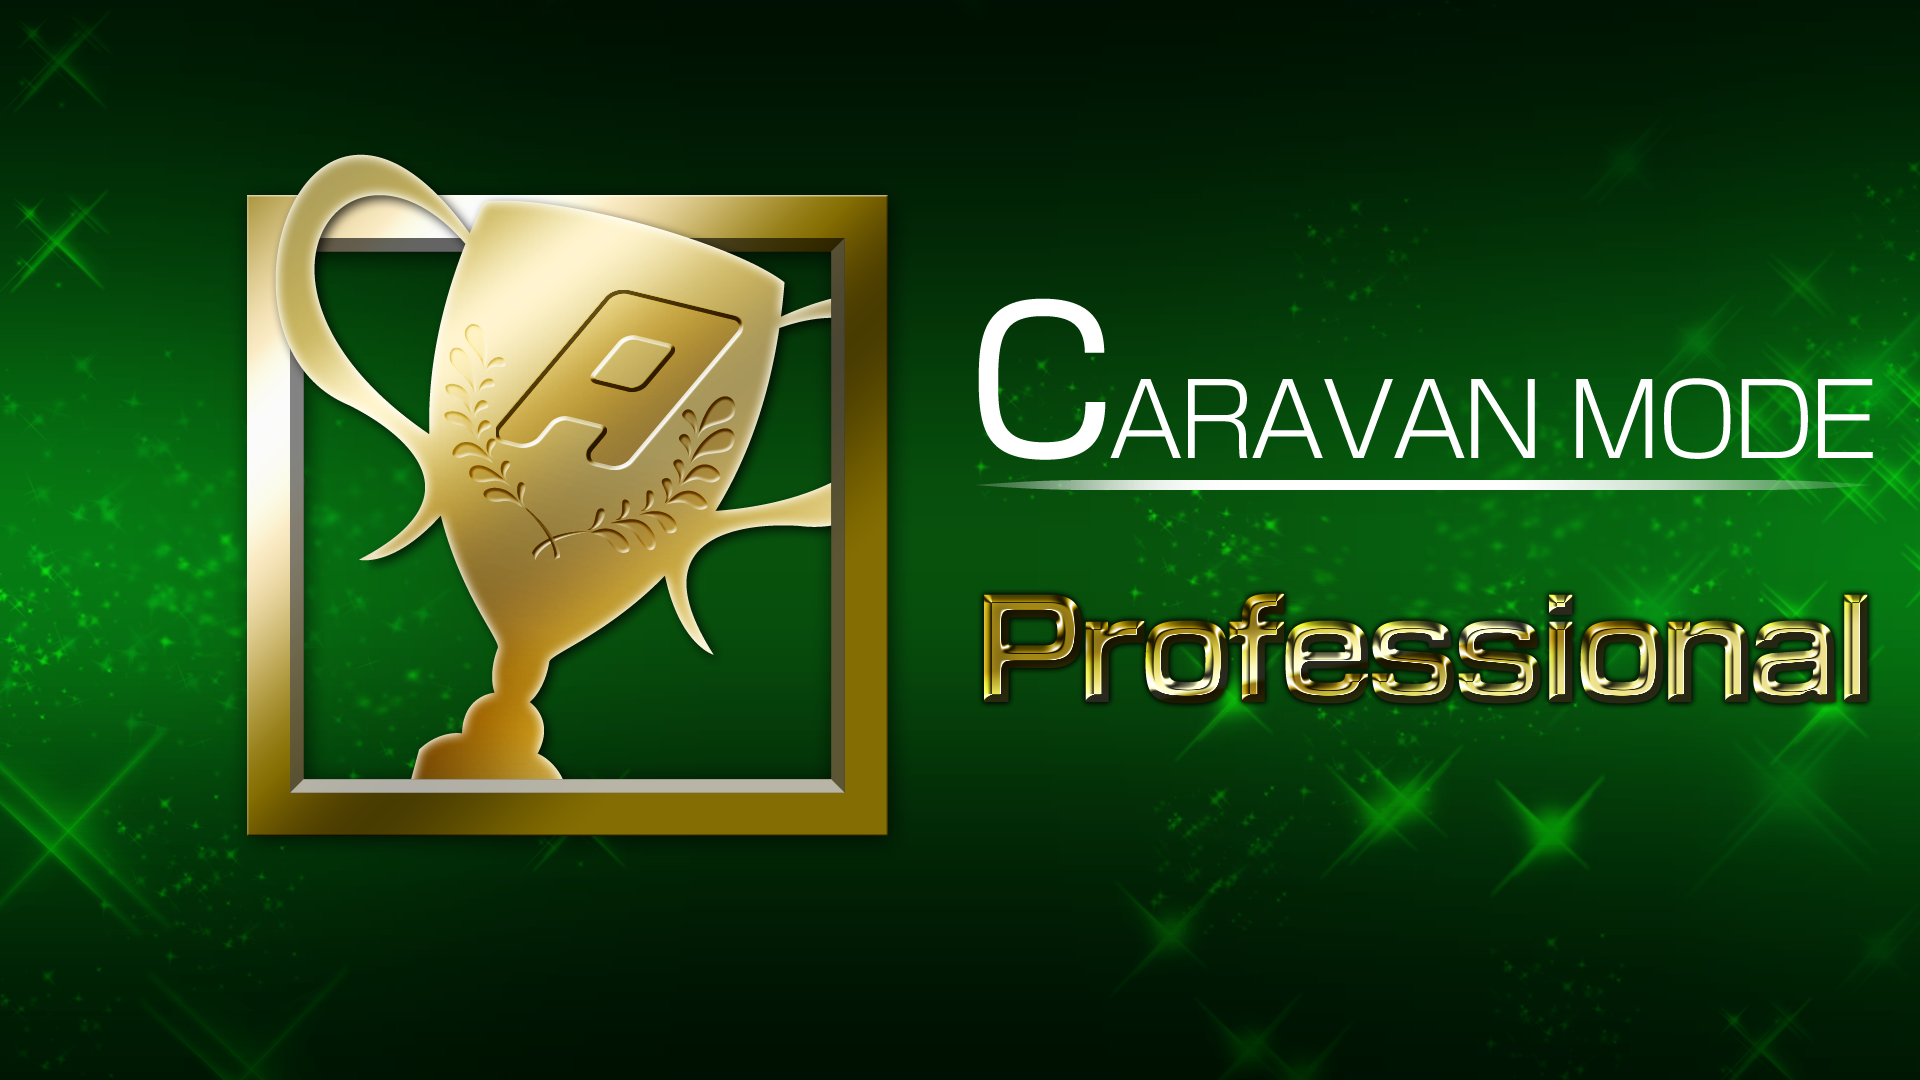 Icon for CARAVAN MODE 9 points